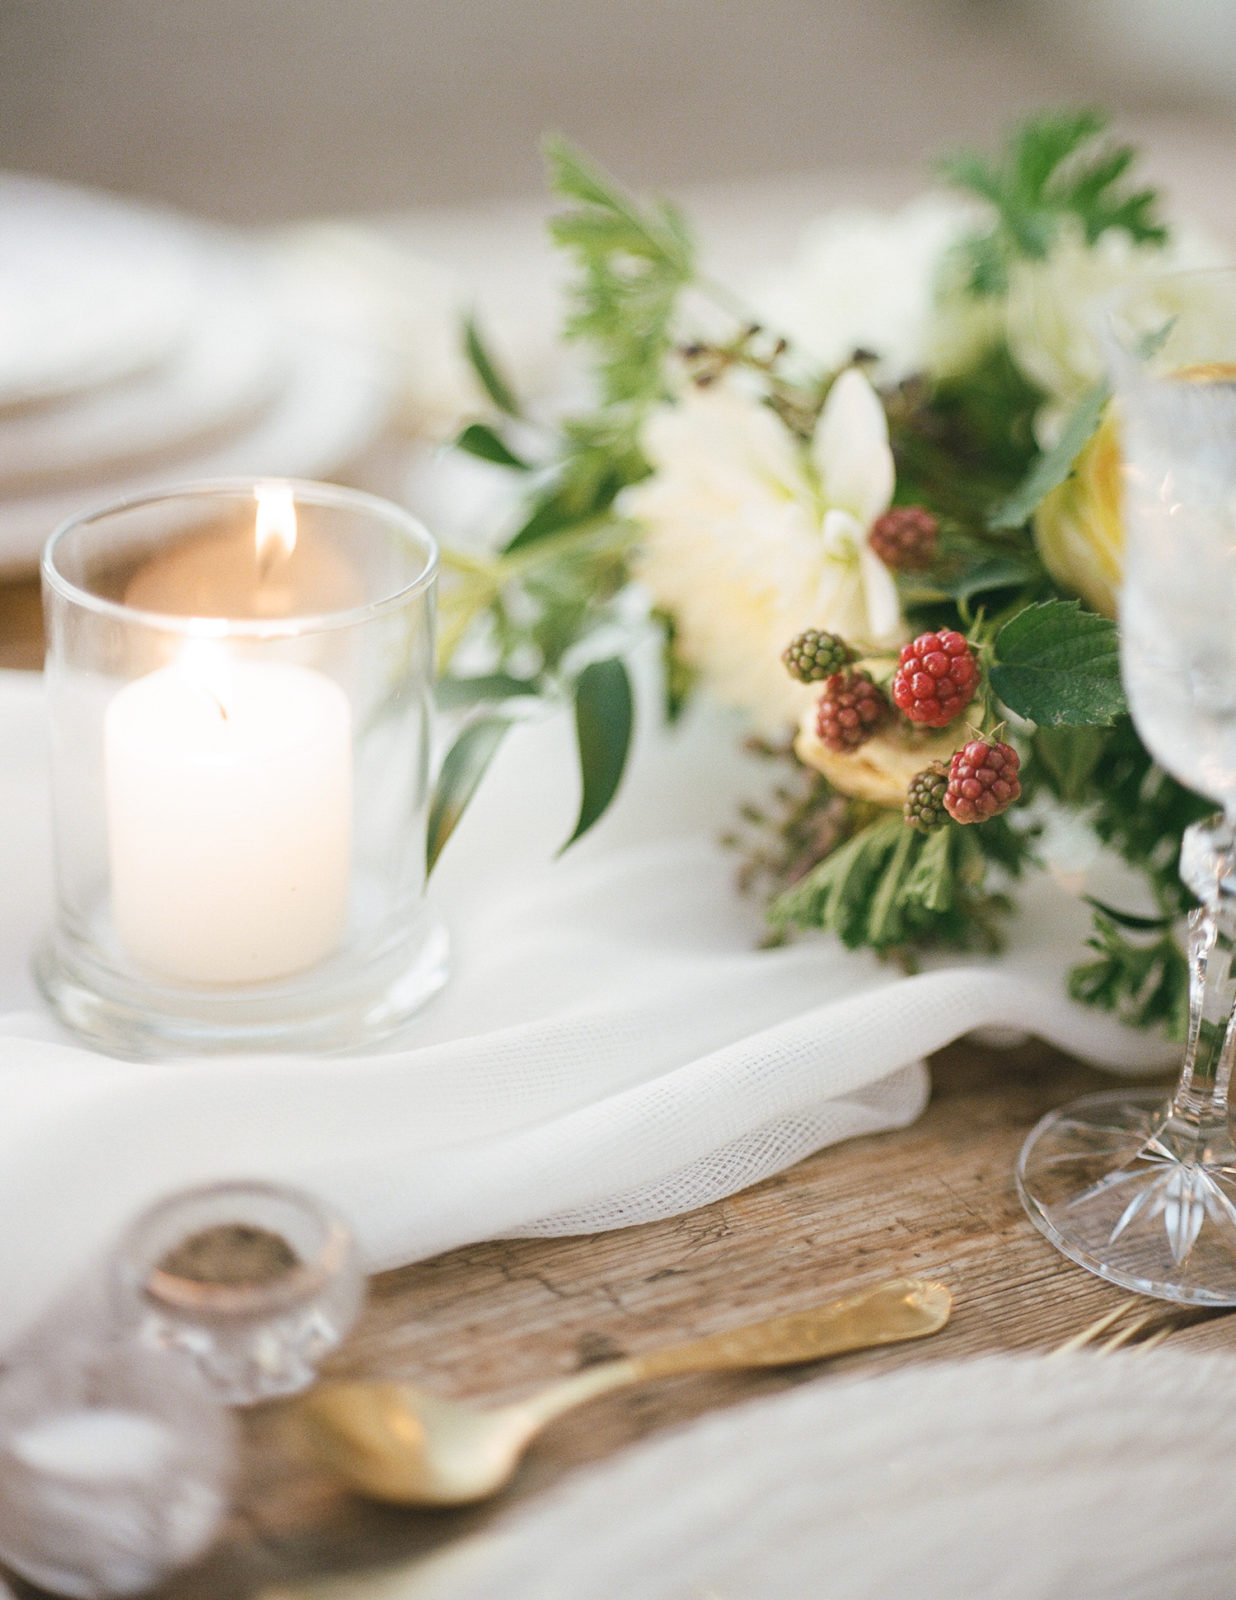 Hammersky Vineyards Wedding Elopement | France Elopement Photographer